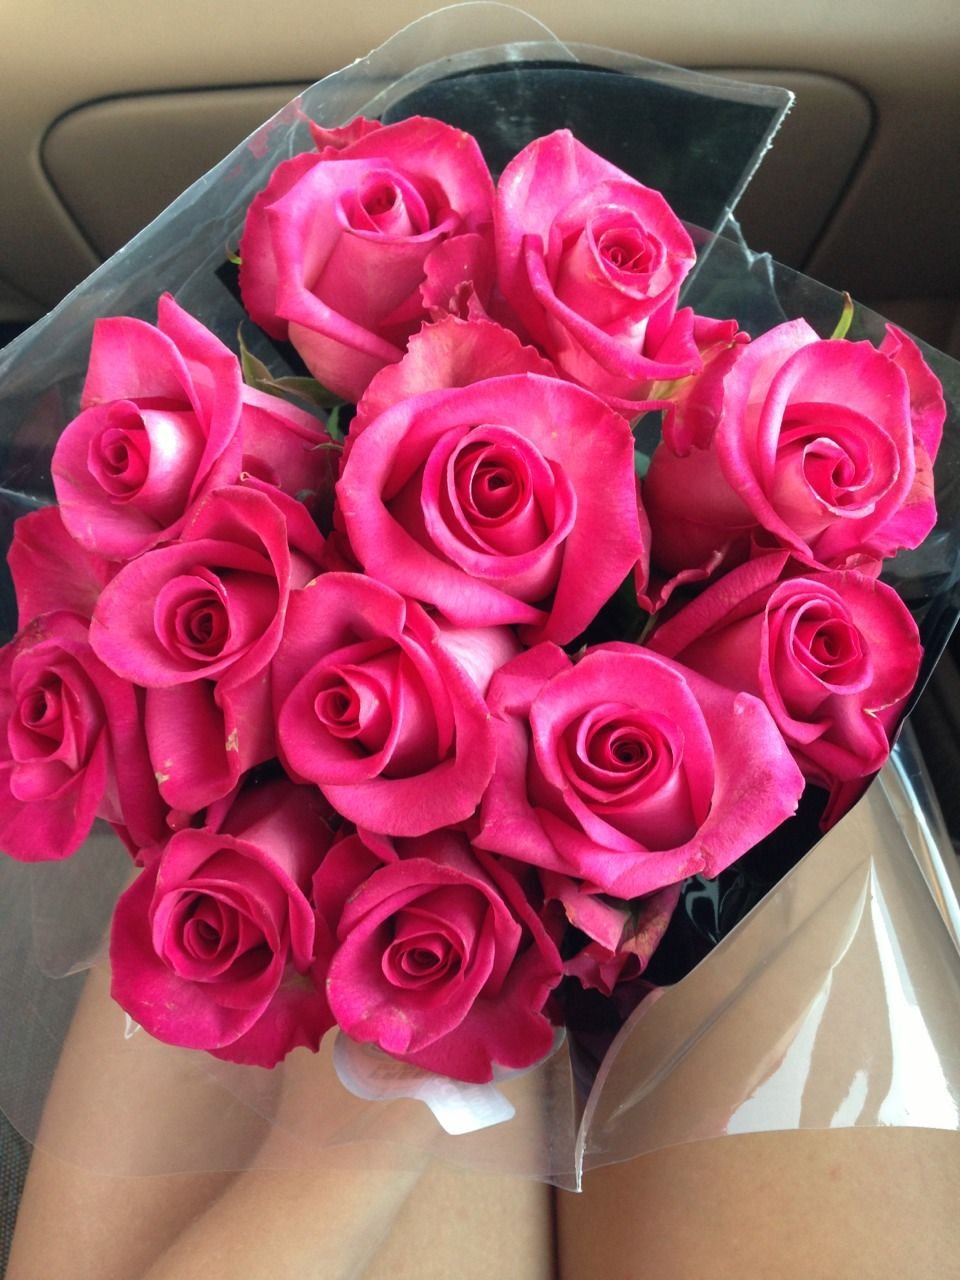 фото цветов роз букет в руках